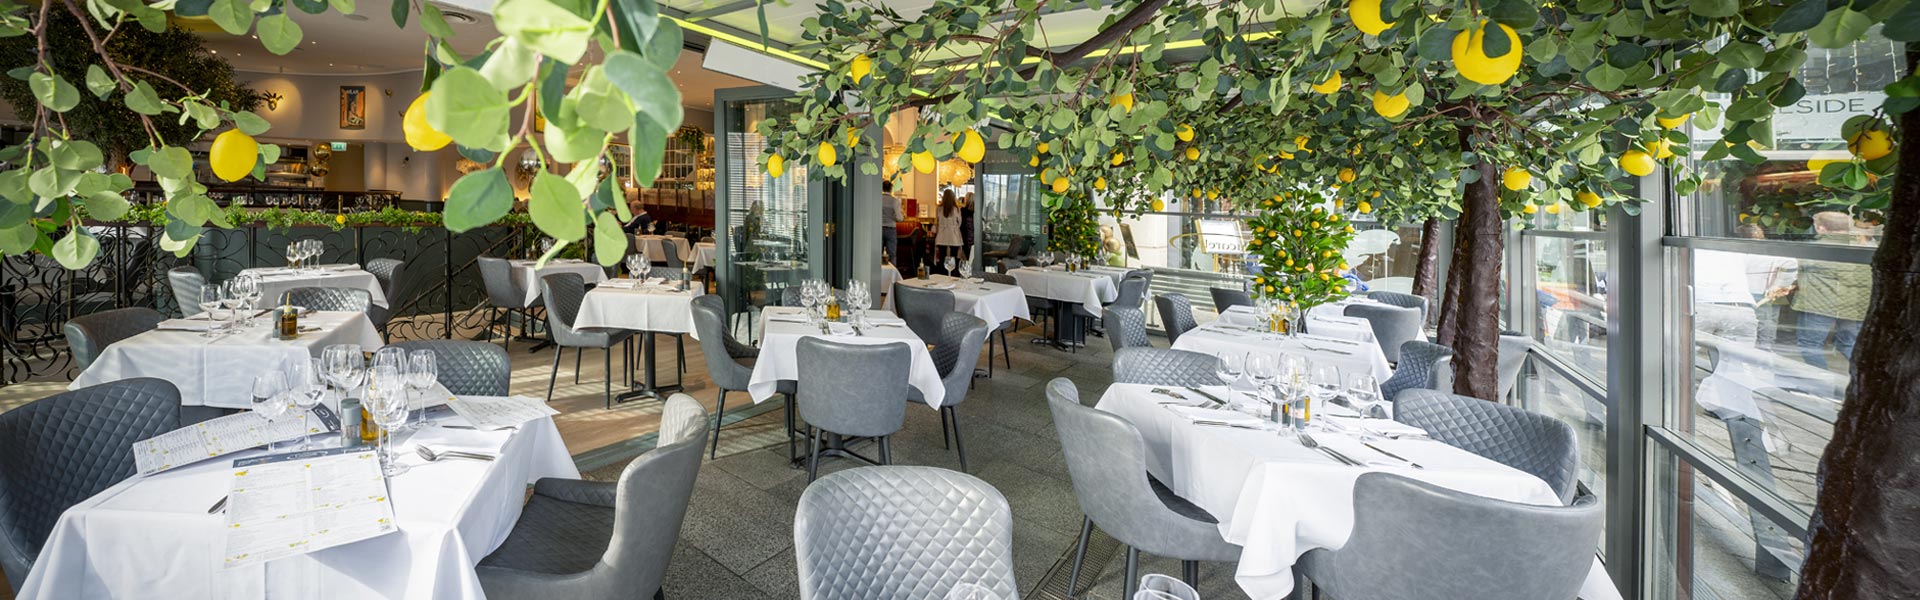 Lucarelli Restaurant - Latest News